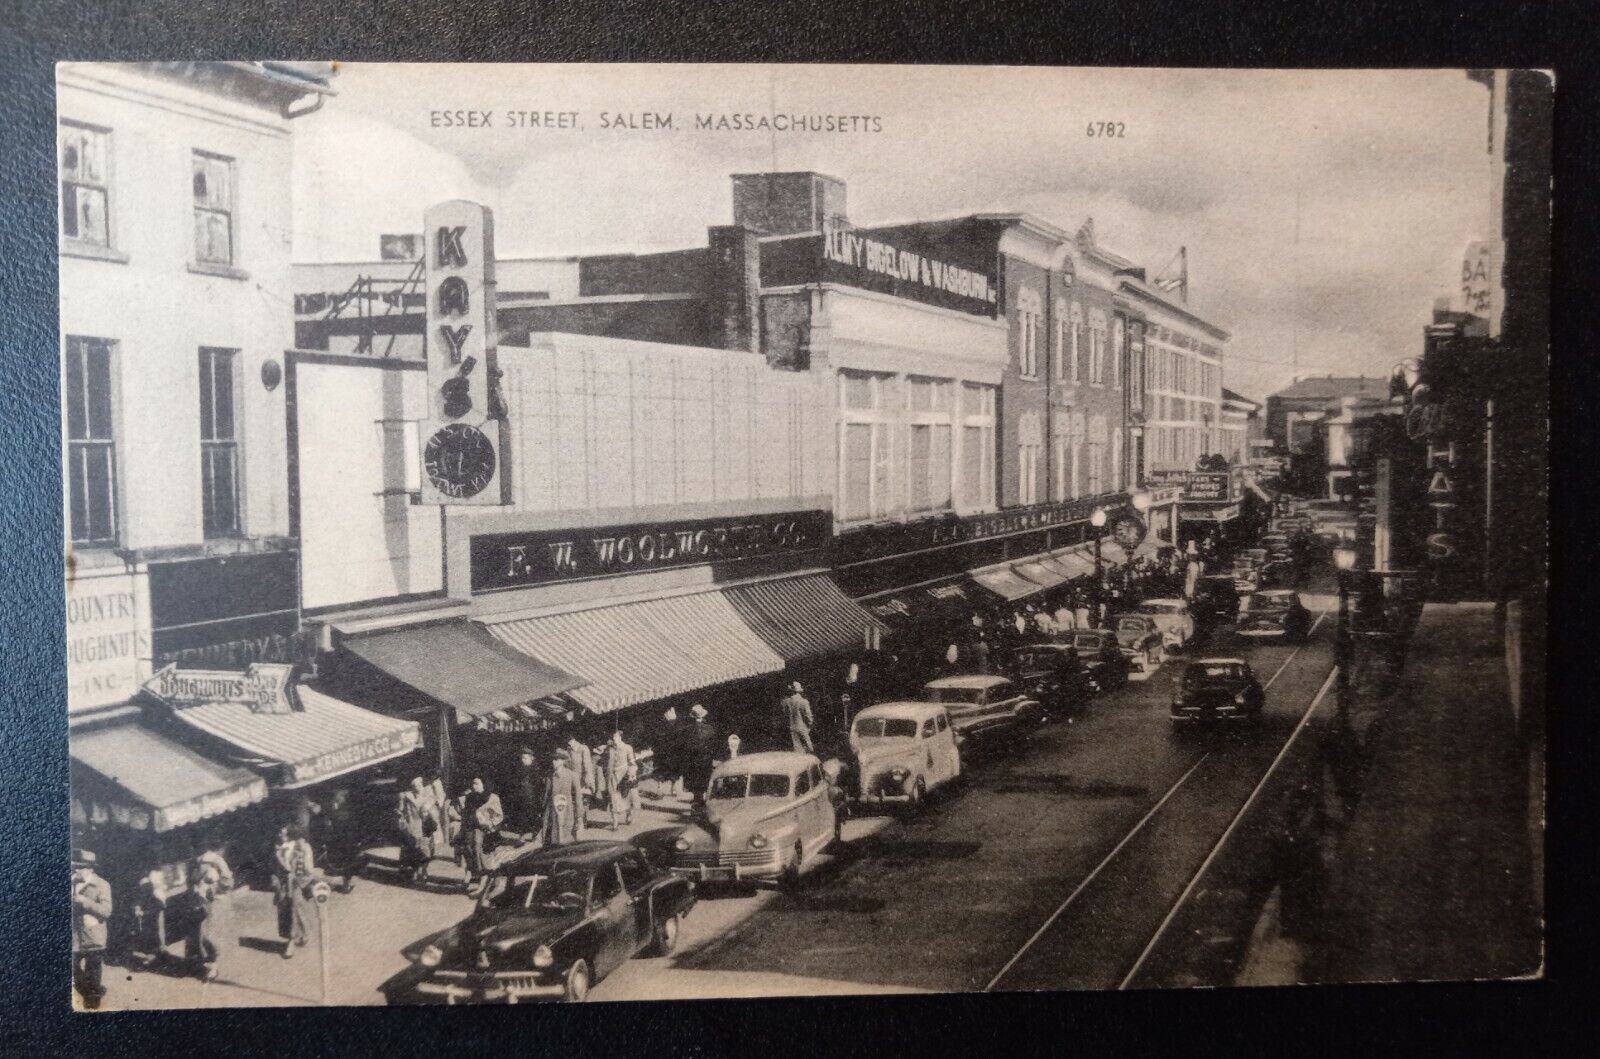 Salem, Mass, Essex Street Vintage Postcard 1930s Old Cars-Signs-Shoppers